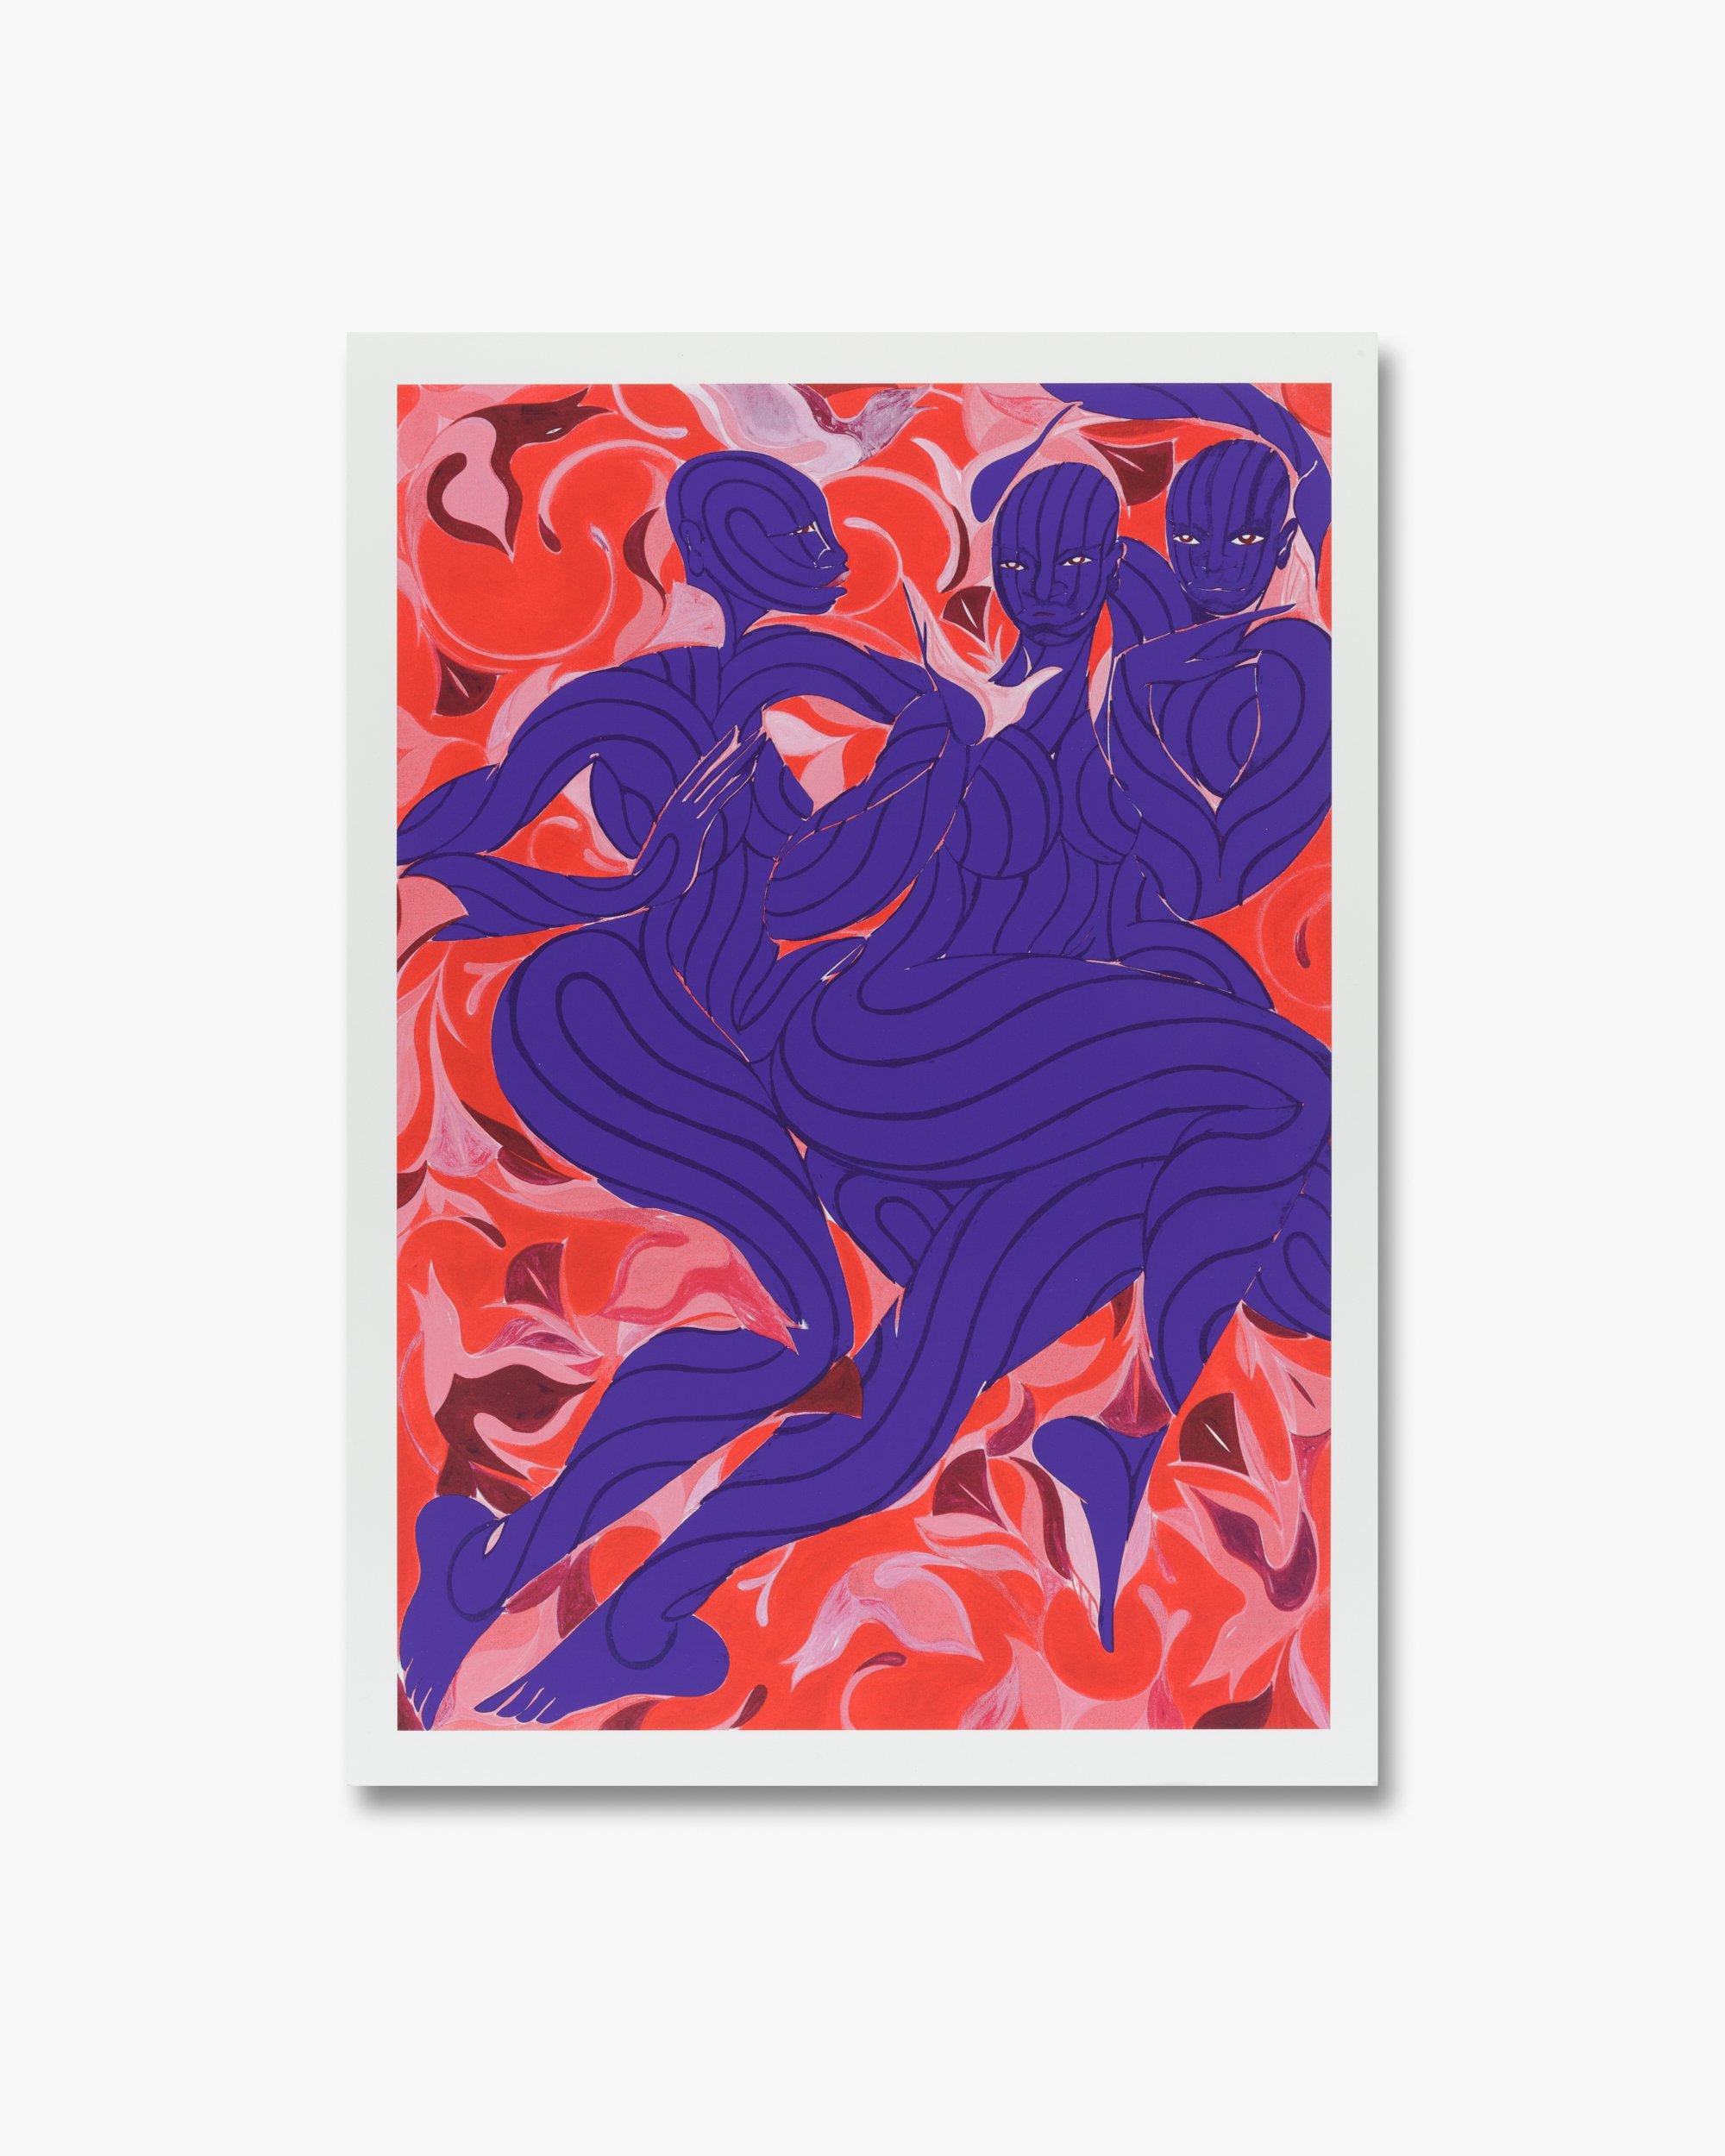 Tunji Adeniyi-Jones Figurative Print - Signed and Numbered Screenprint "Violet Dance"